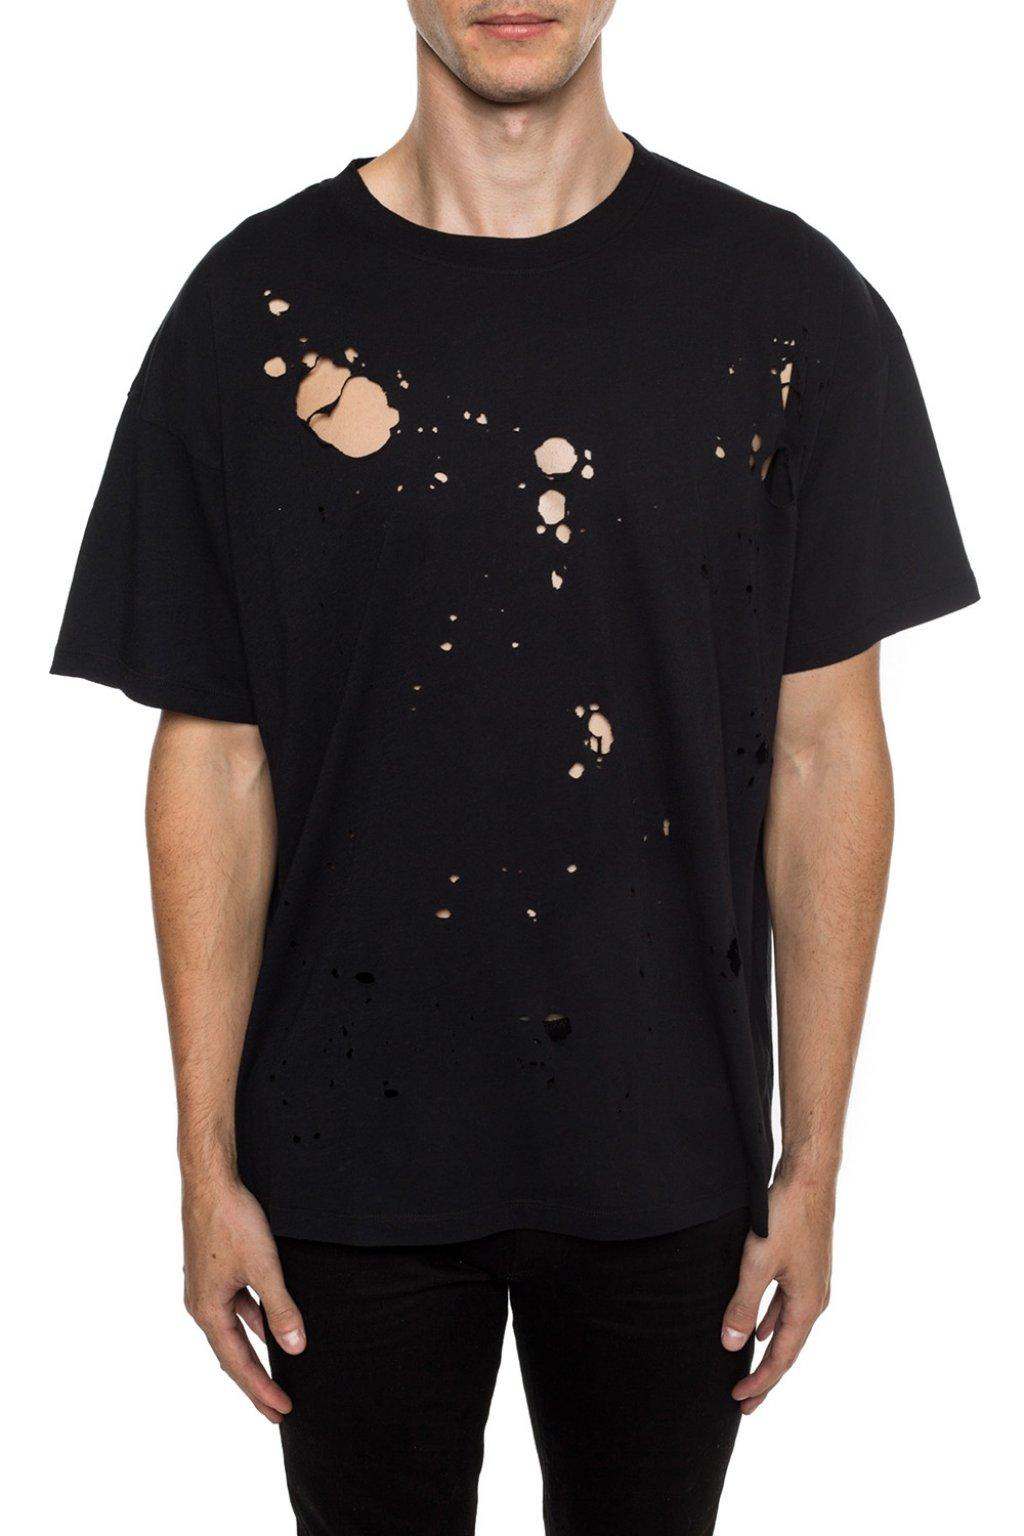 Ann Demeulemeester T-shirt With Holes Black for Men | Lyst